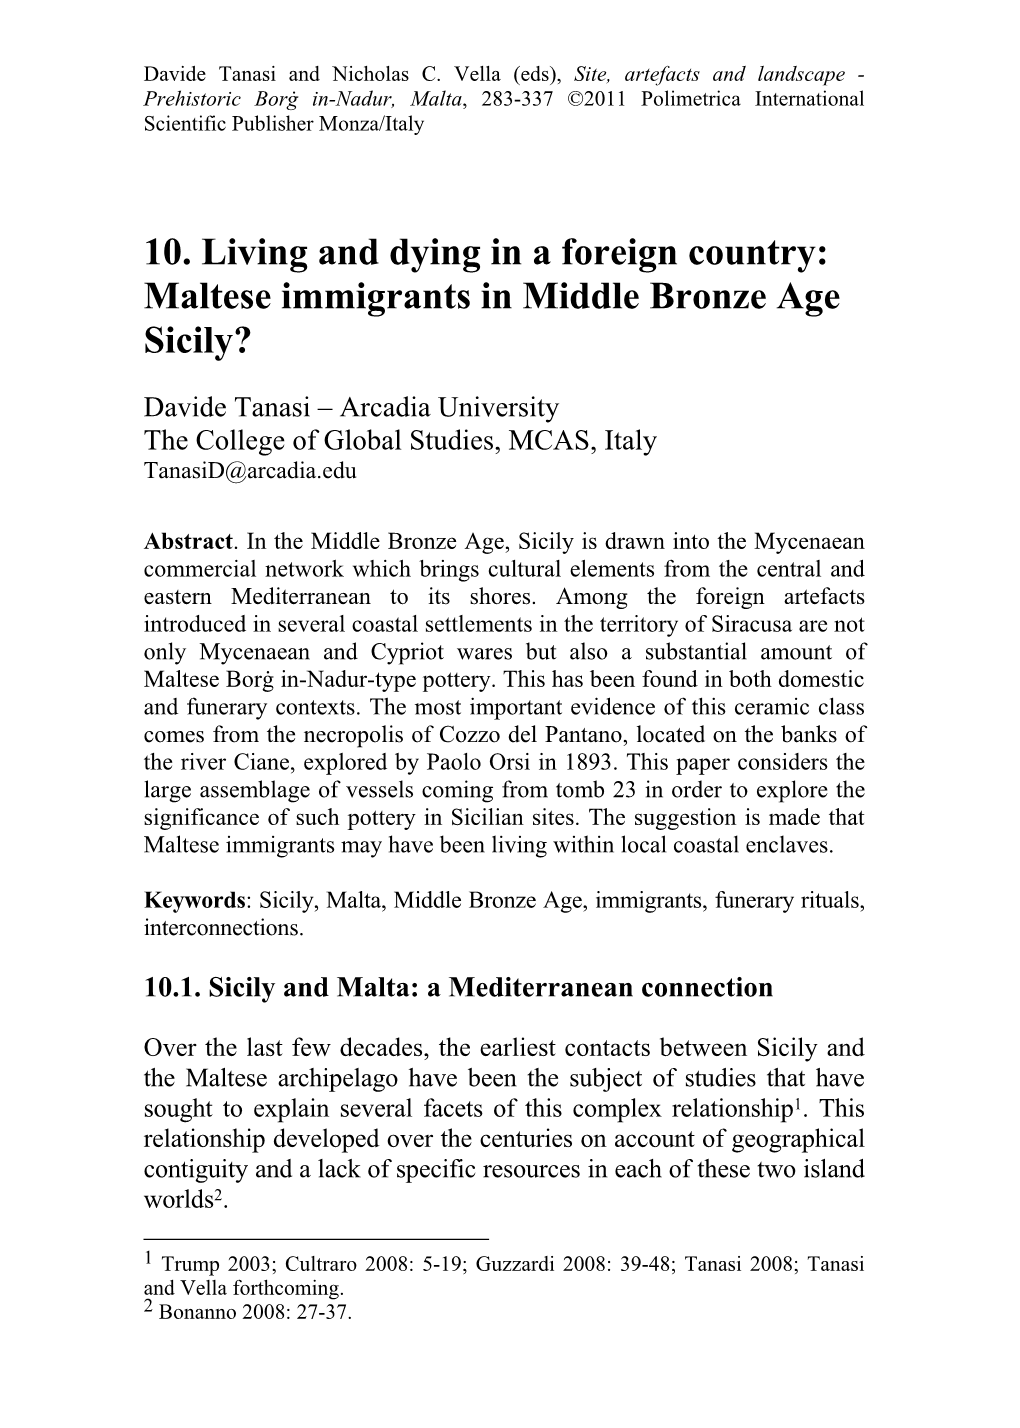 Maltese Immigrants in Middle Bronze Age Sicily?